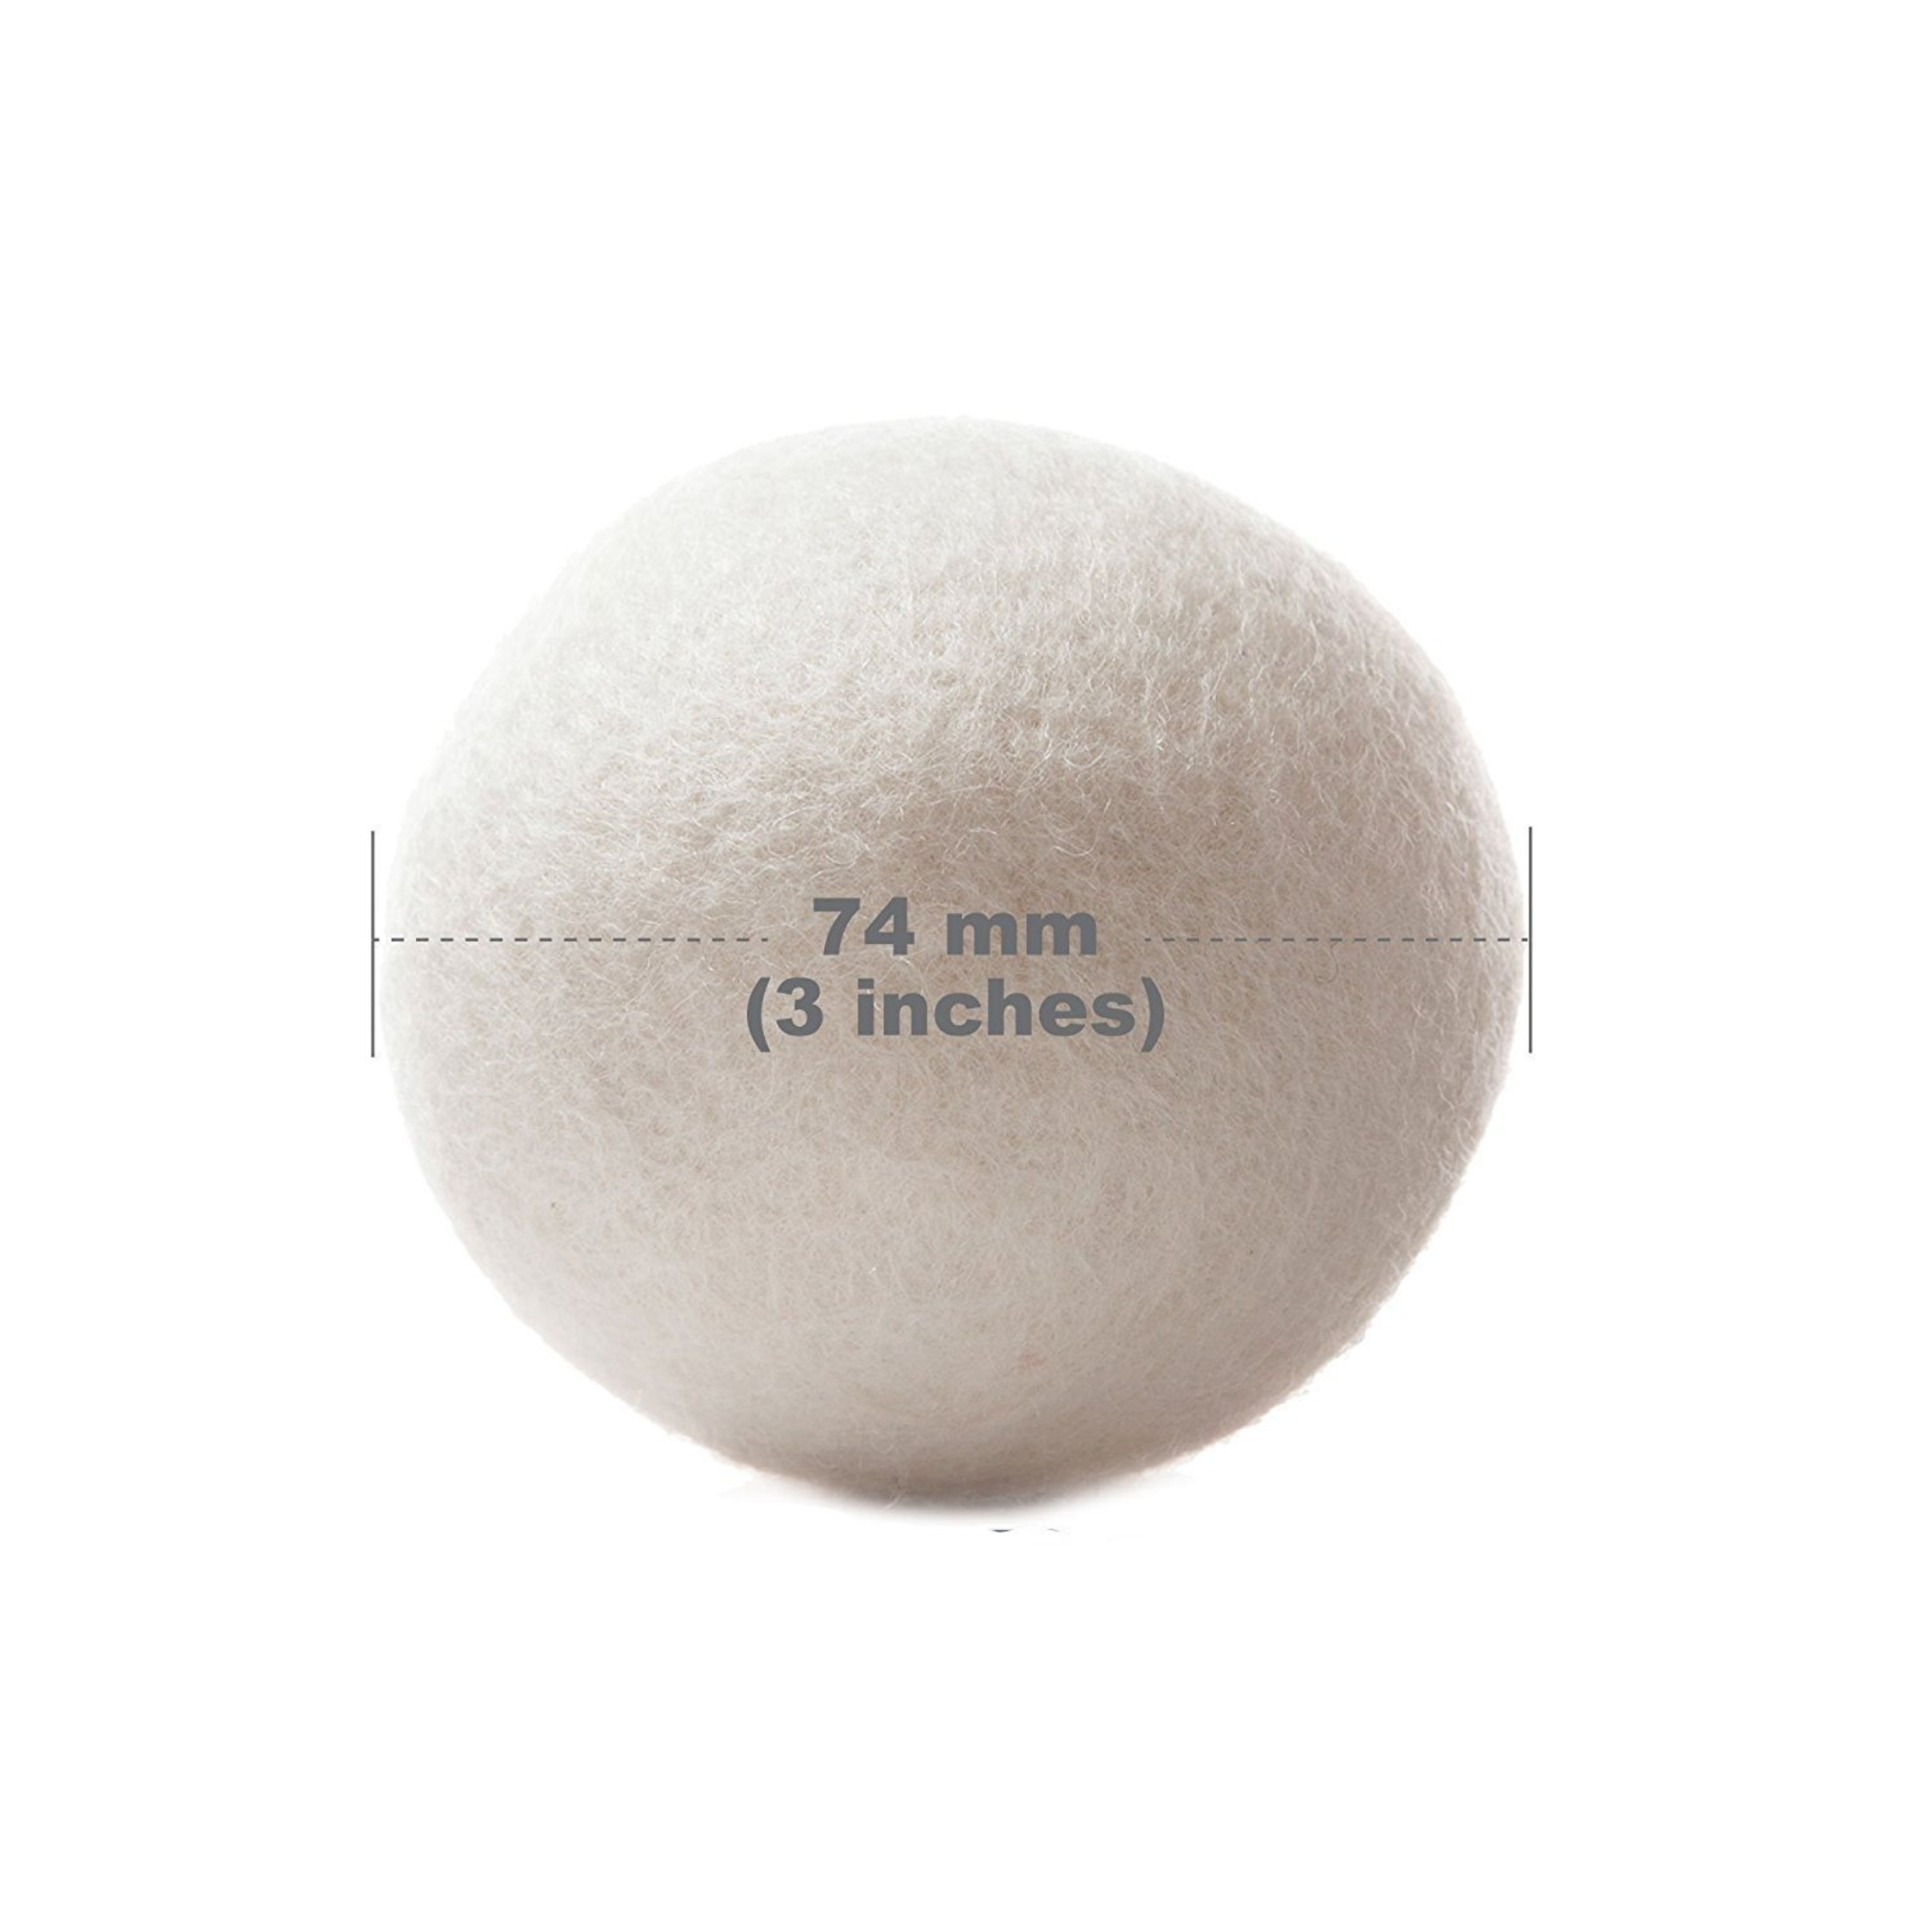 Wool Dryer Balls by Beflax Linen